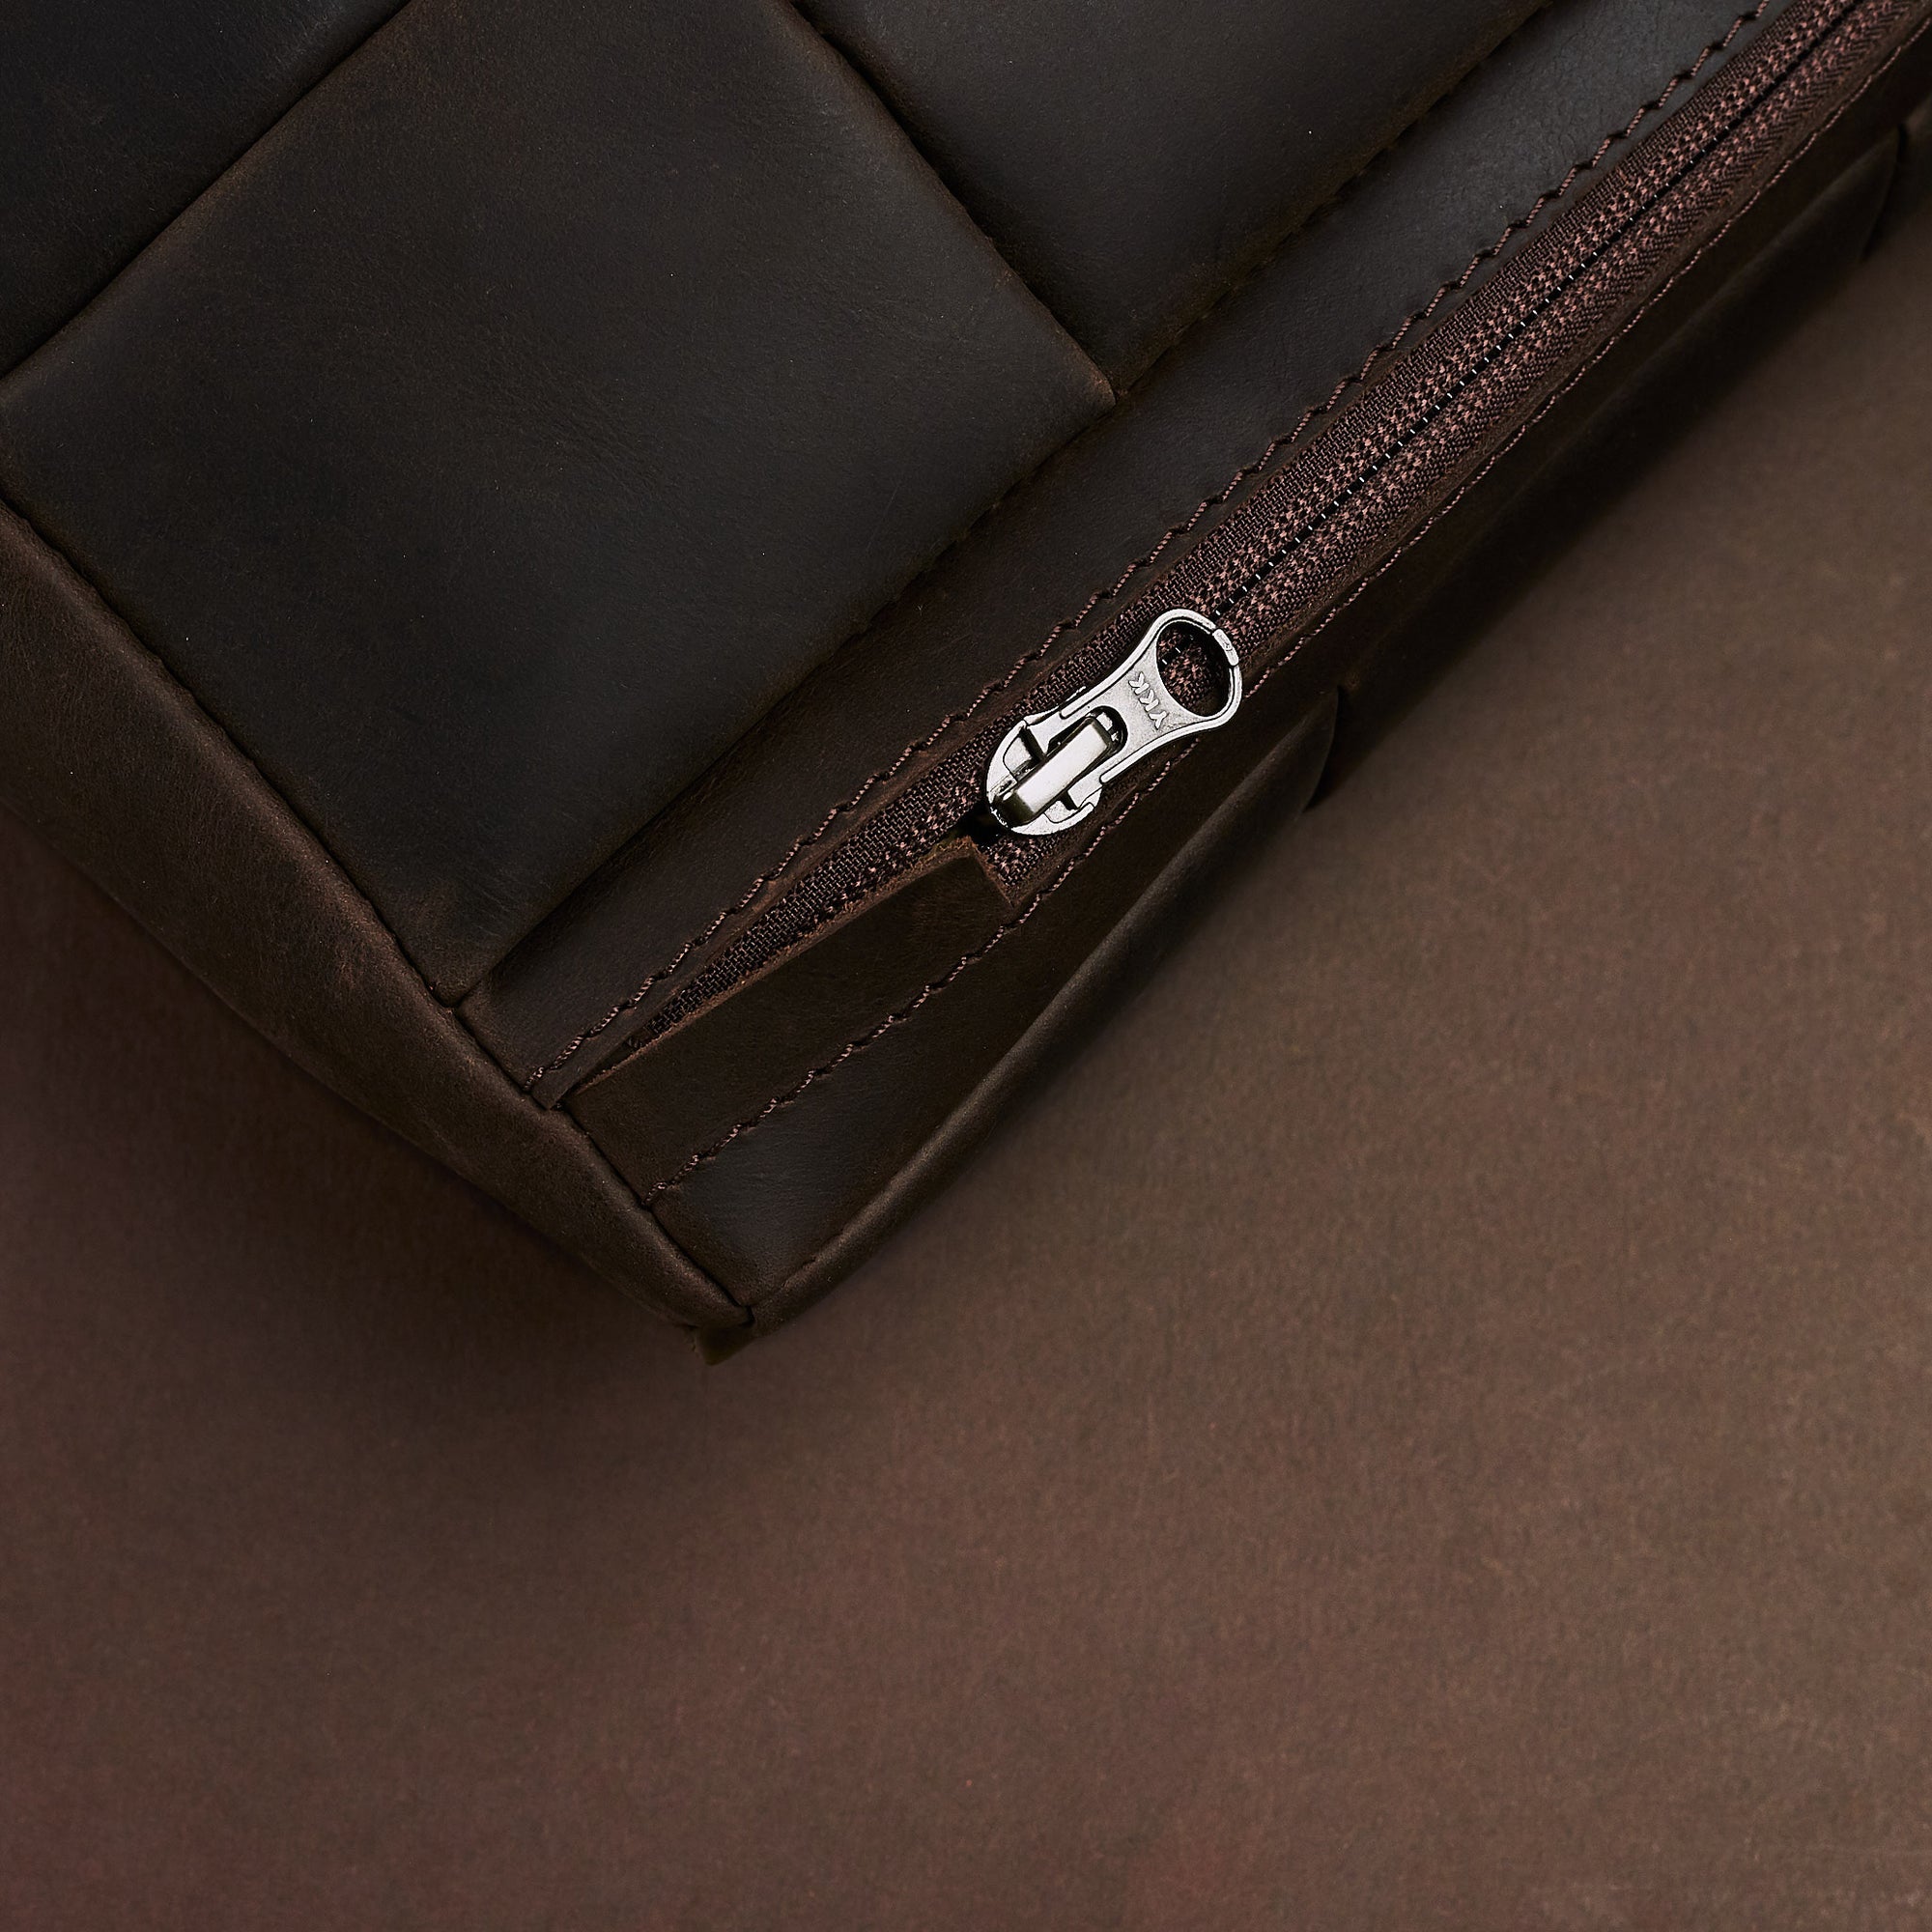 Zipper detail. Ergonomic under desk footrest cover in brown by Capra Leather